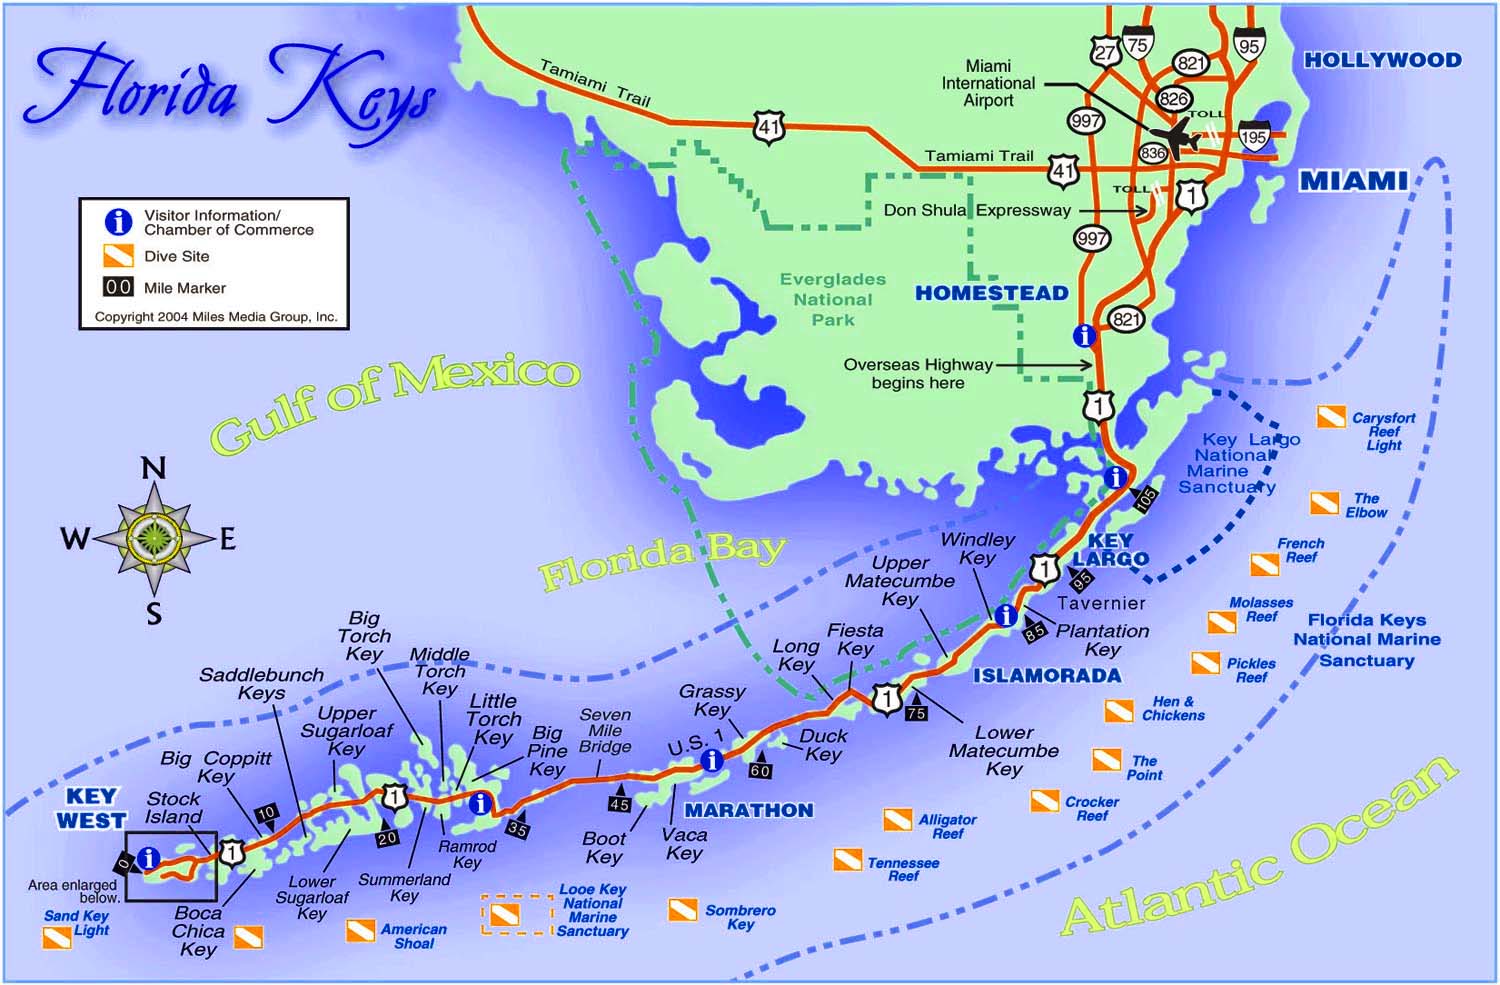 Caribbean Travel-Florida Keys Directory - Caribbean Tour | Caribbean